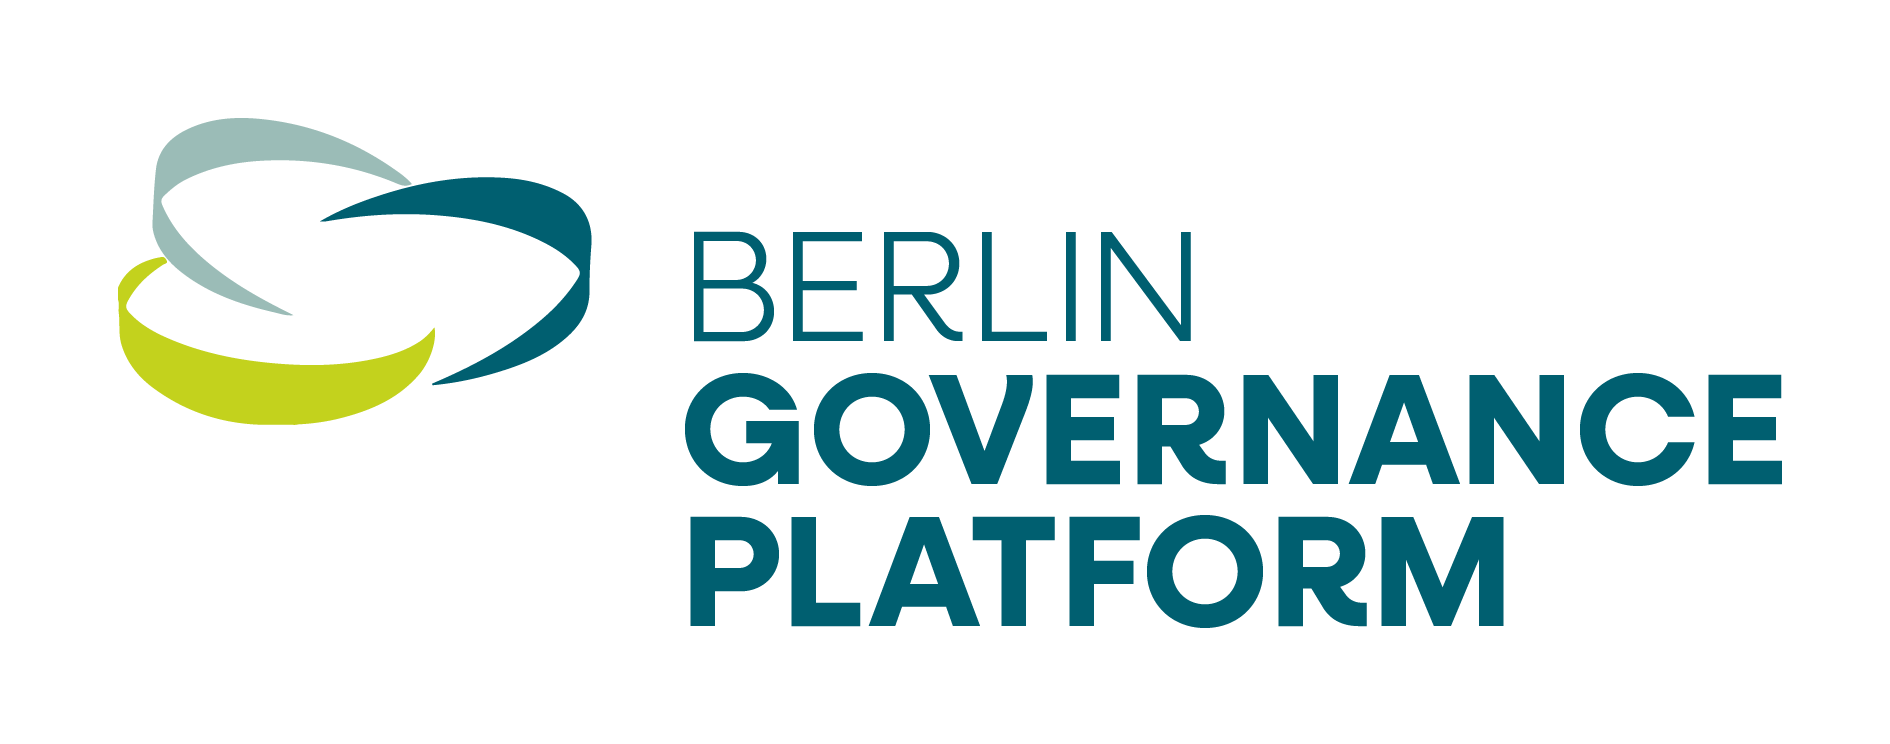 Berlin Governance Platform